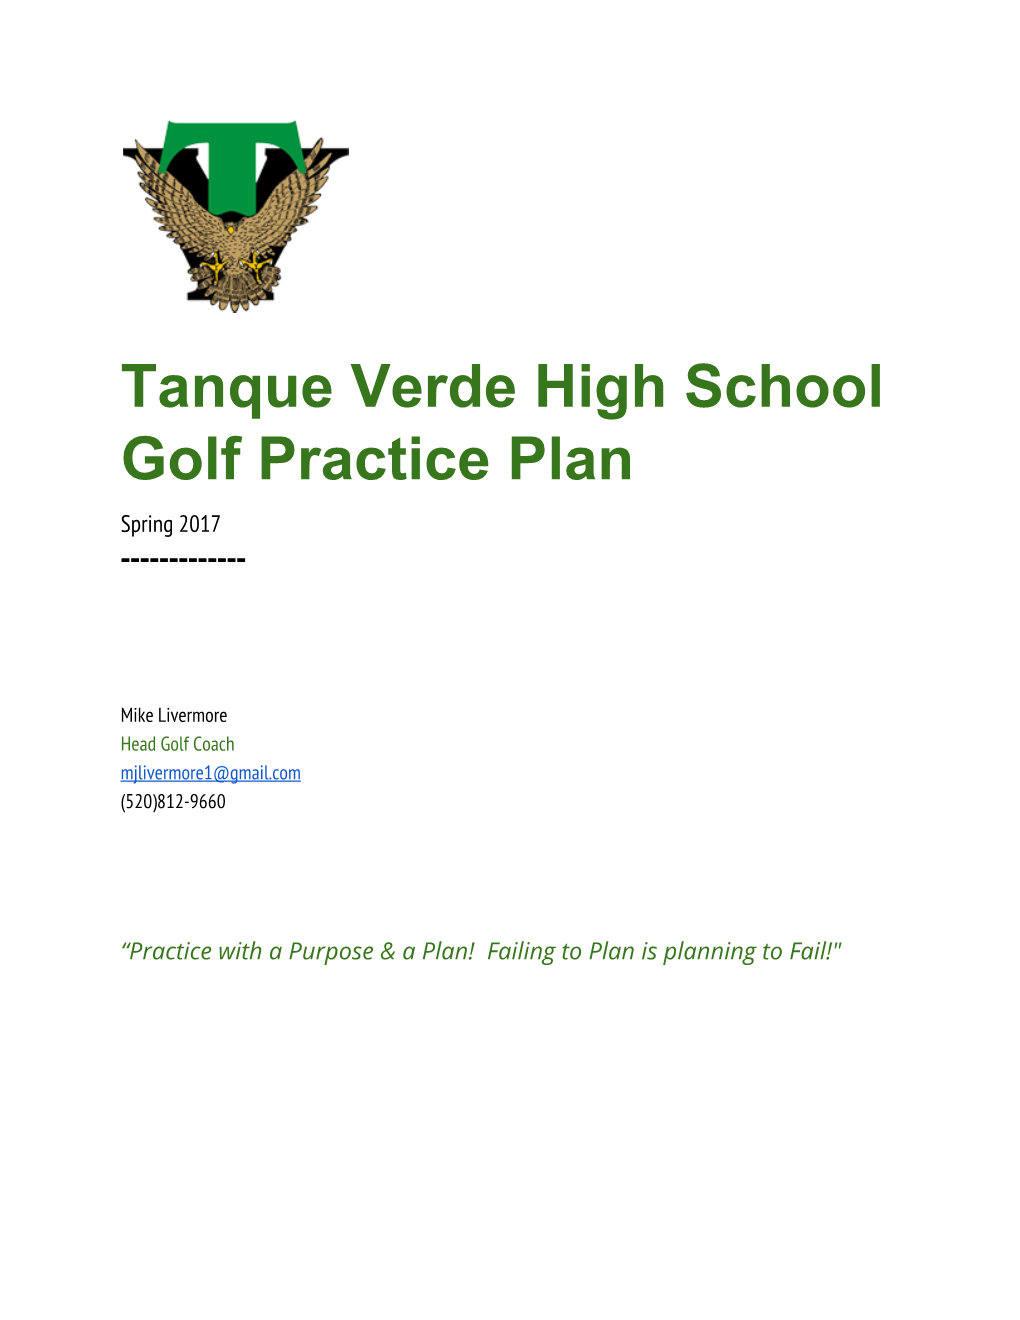 Tanque Verde High School Golf Practice Plan Spring 2017